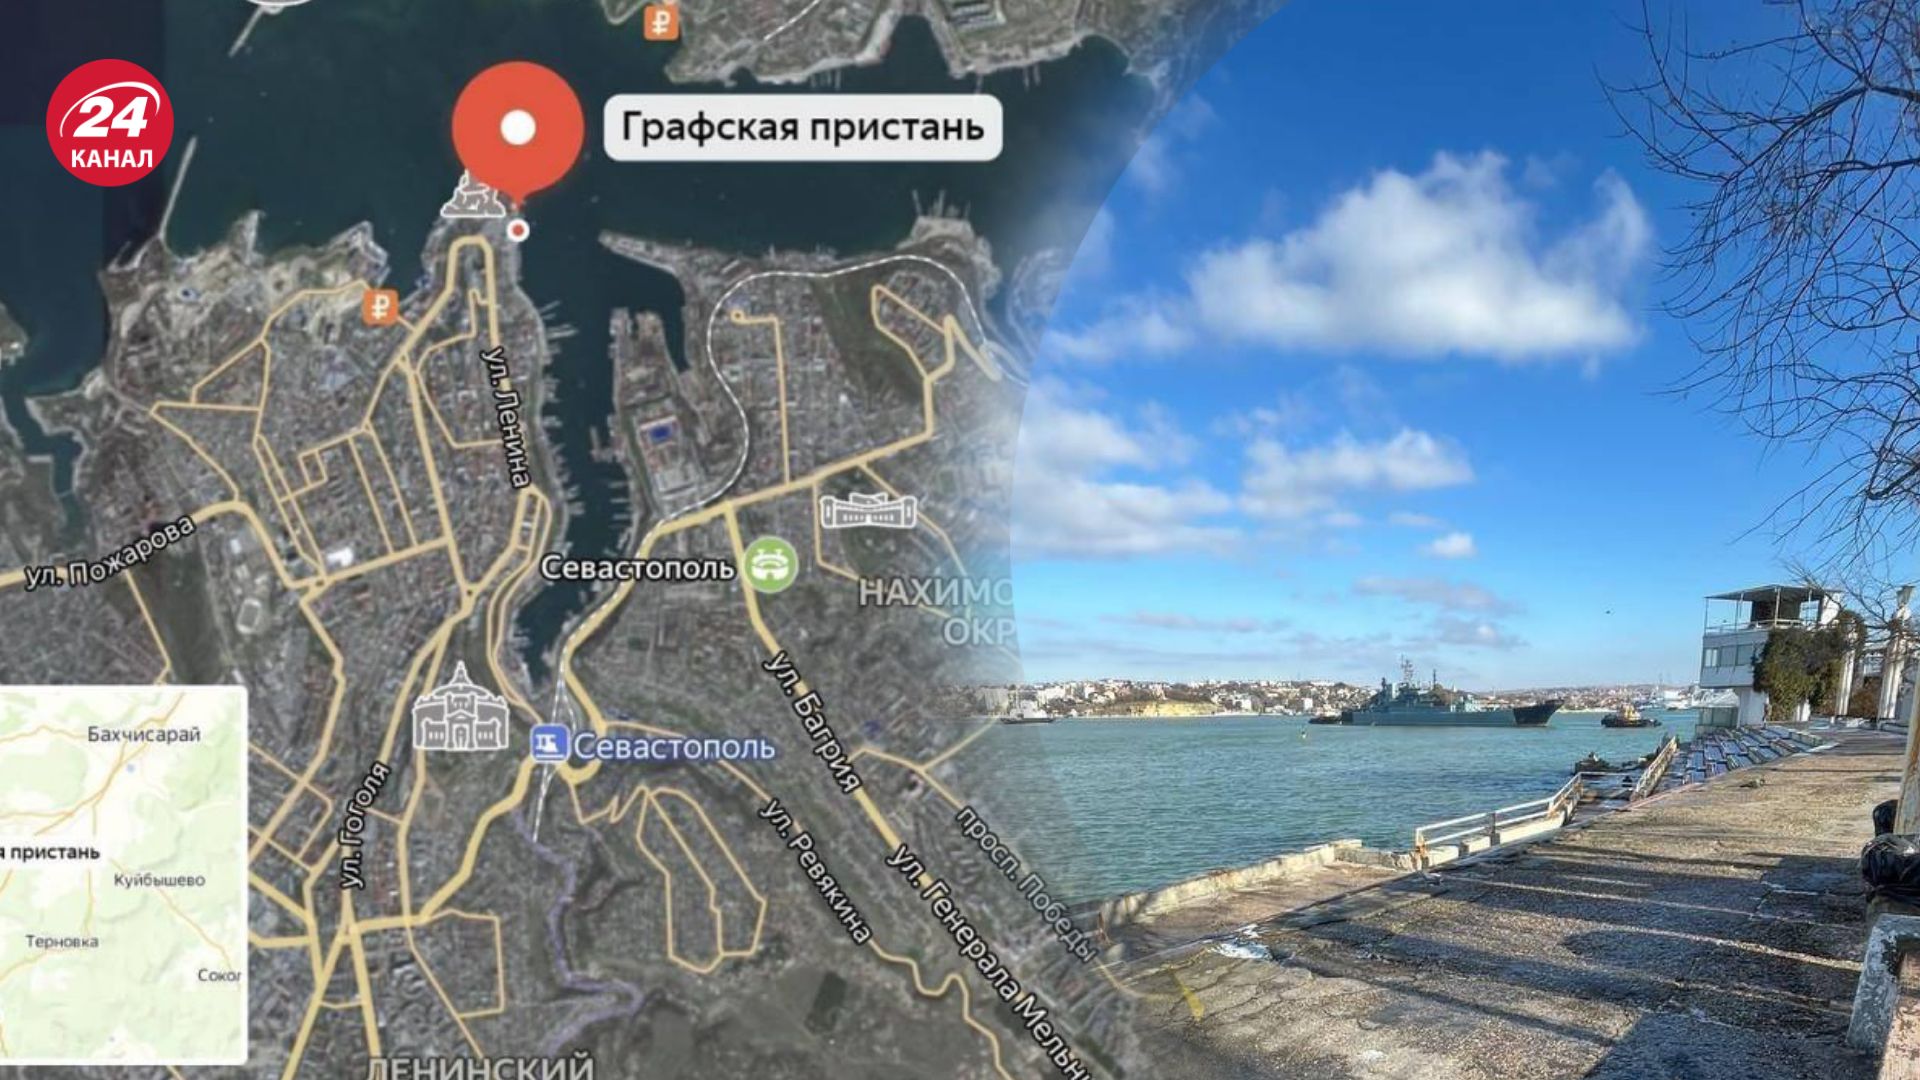 Десантний корабель росіян прибв у Севастополь